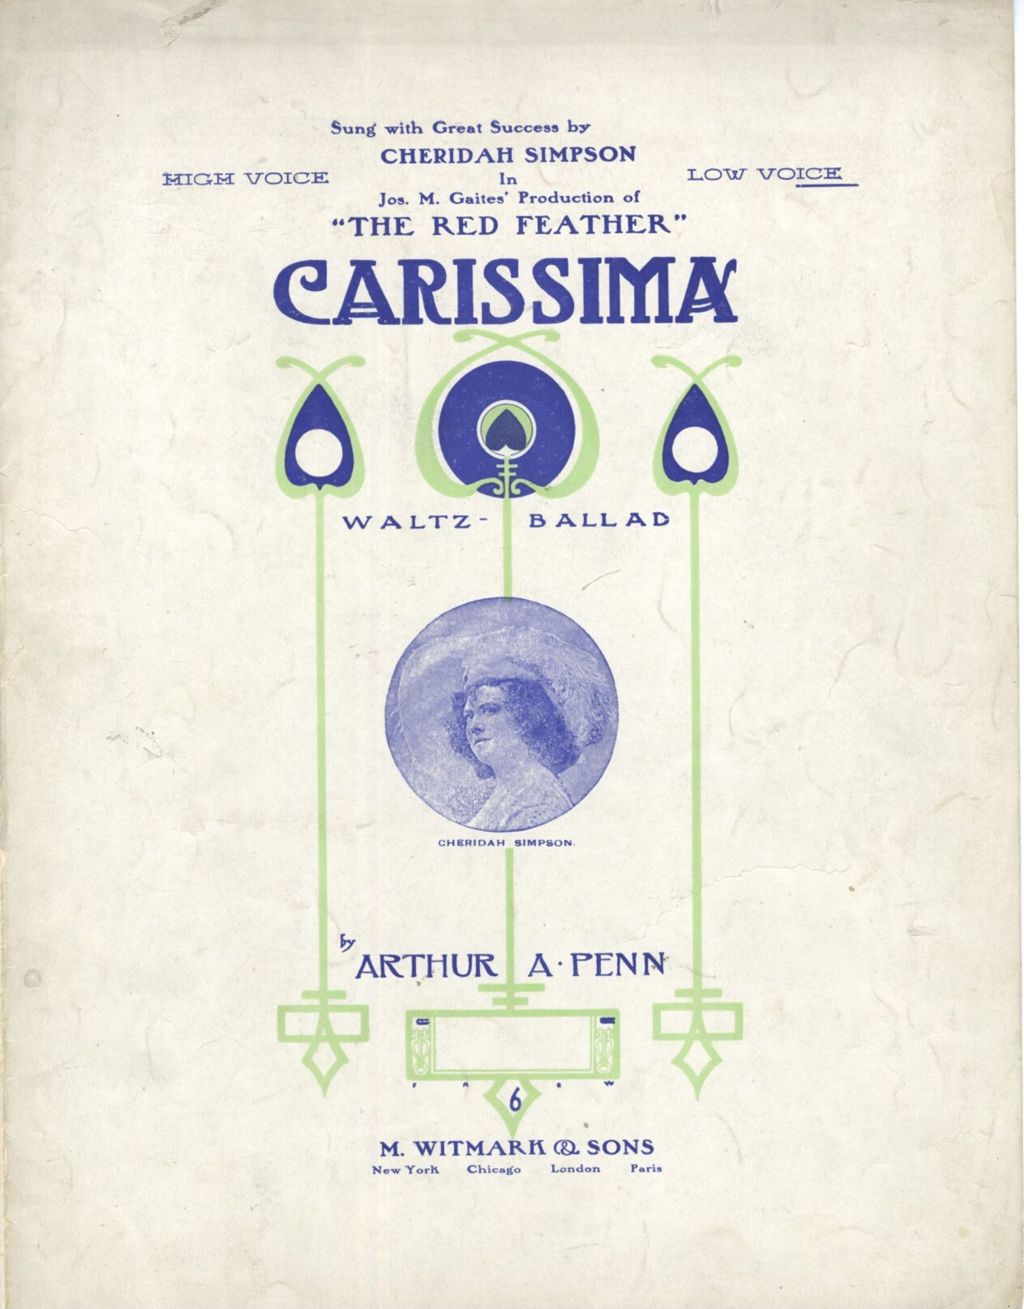 Miniature of Carissima